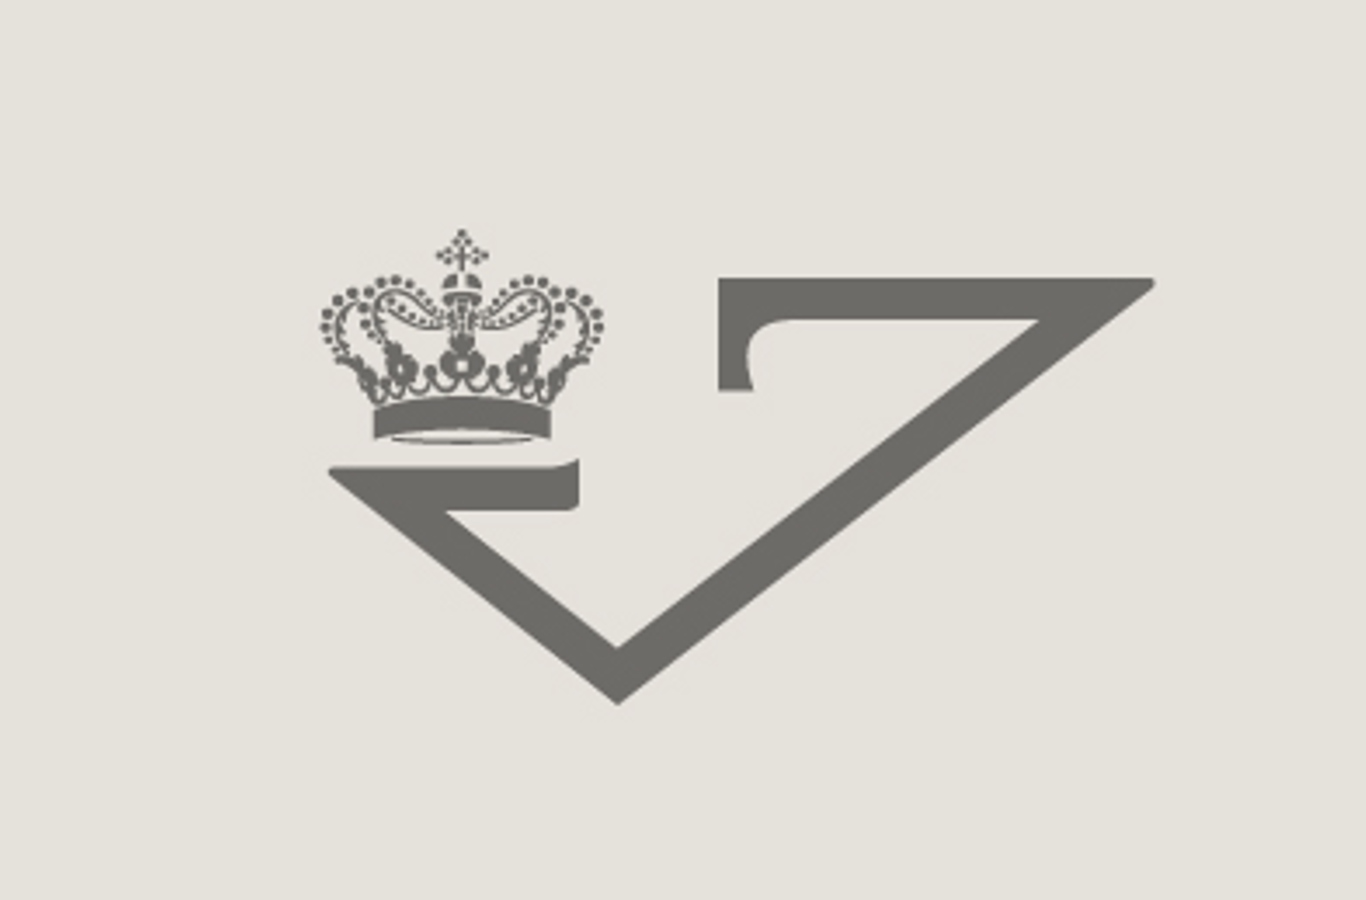 Hans Kongelige Højhed Prins Joachims monogram